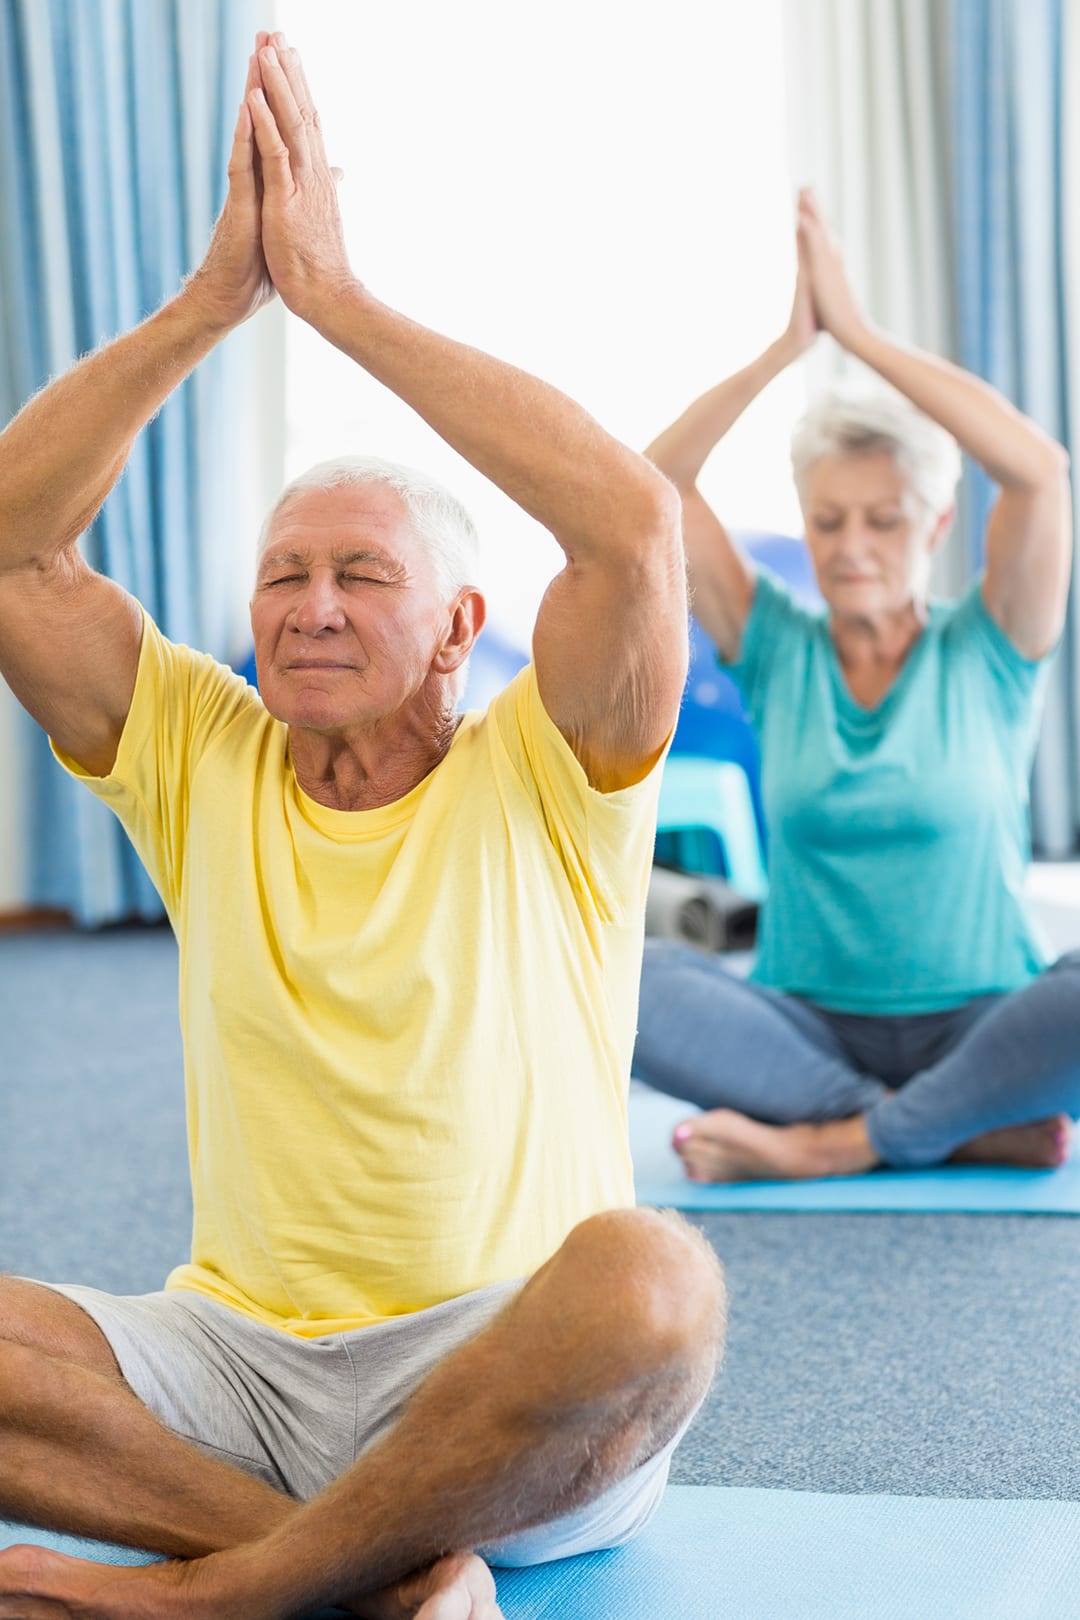 Yoga Poses For Elderly: Enhance Flexibility And Joint Health